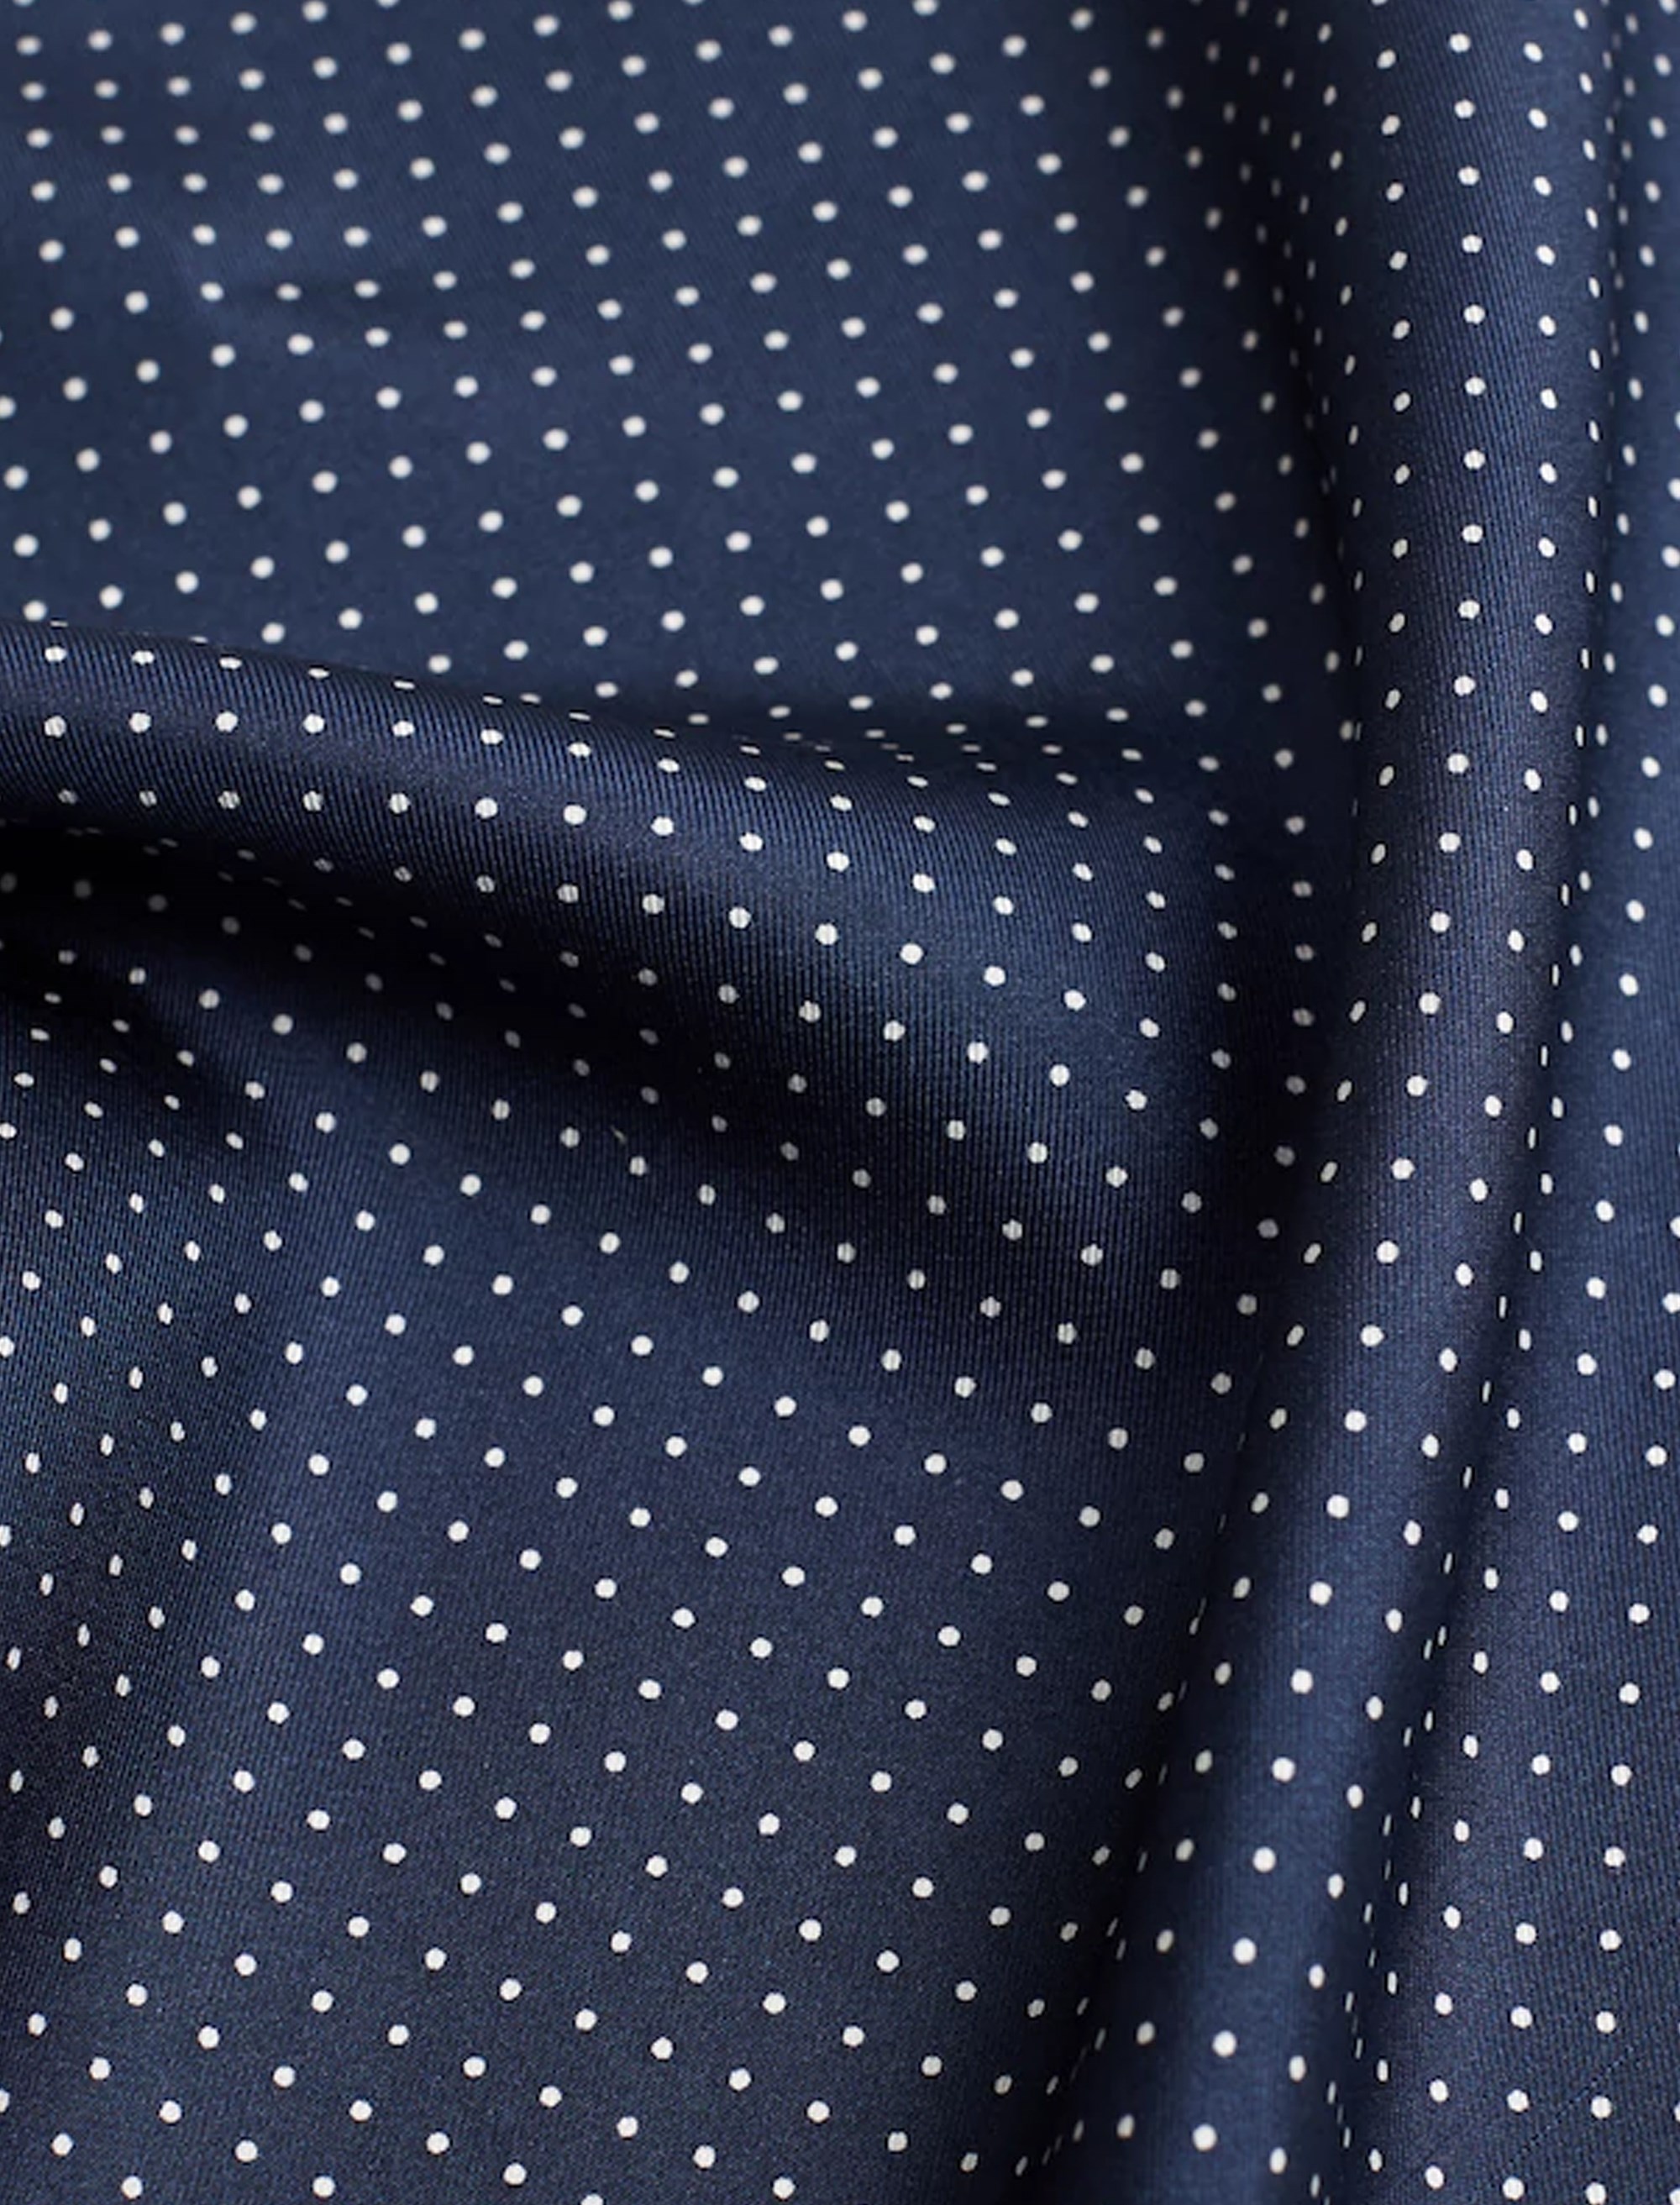 دستمال جیب ابریشم طرح دار مردانه - مانگو - سرمه اي - 4